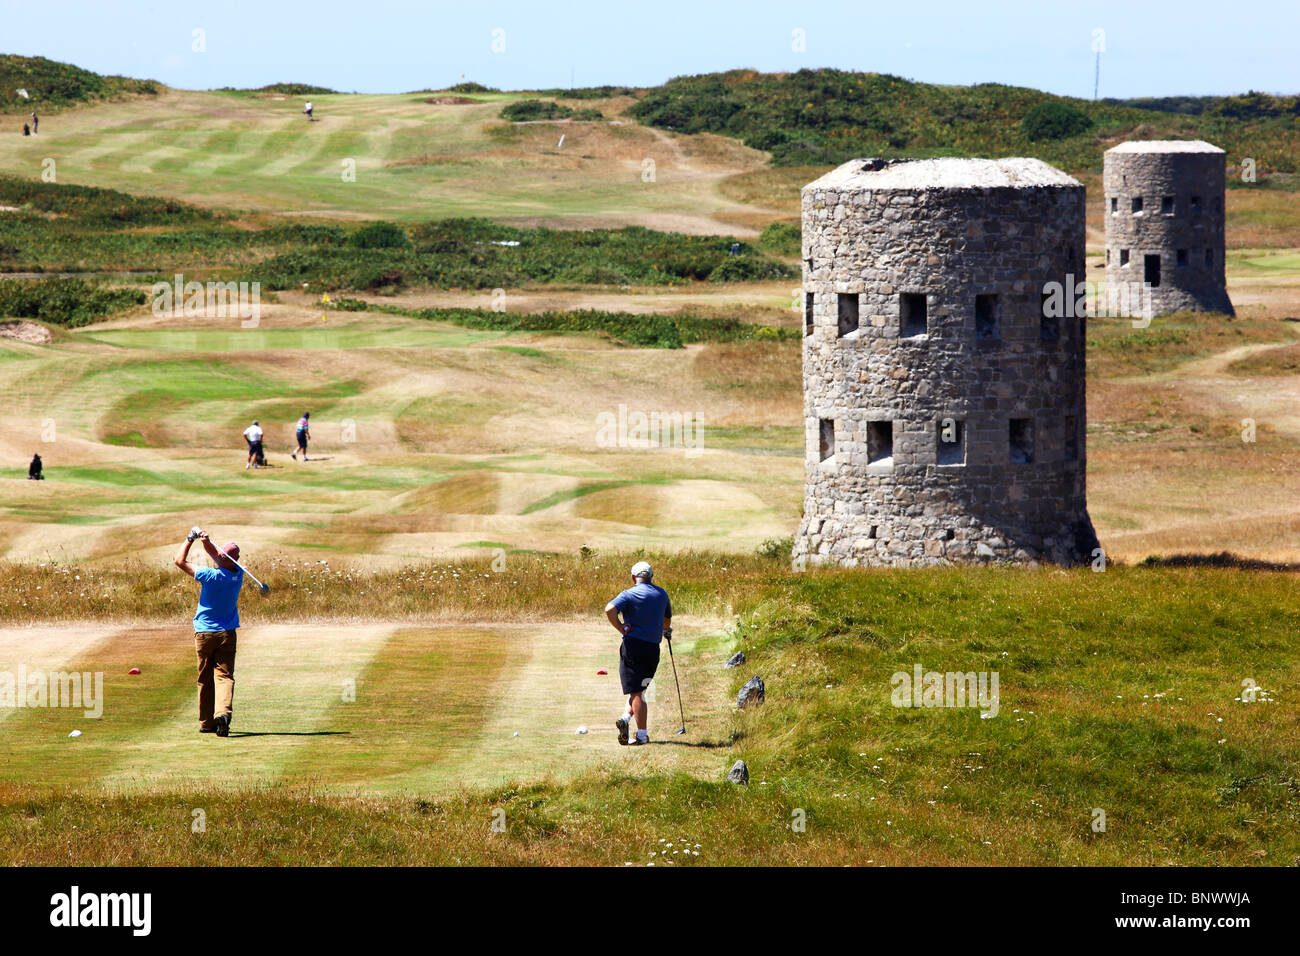 Royal Guernsey Golf Club, Guernsey, Isole del Canale, IL REGNO UNITO, l'Europa. Foto Stock